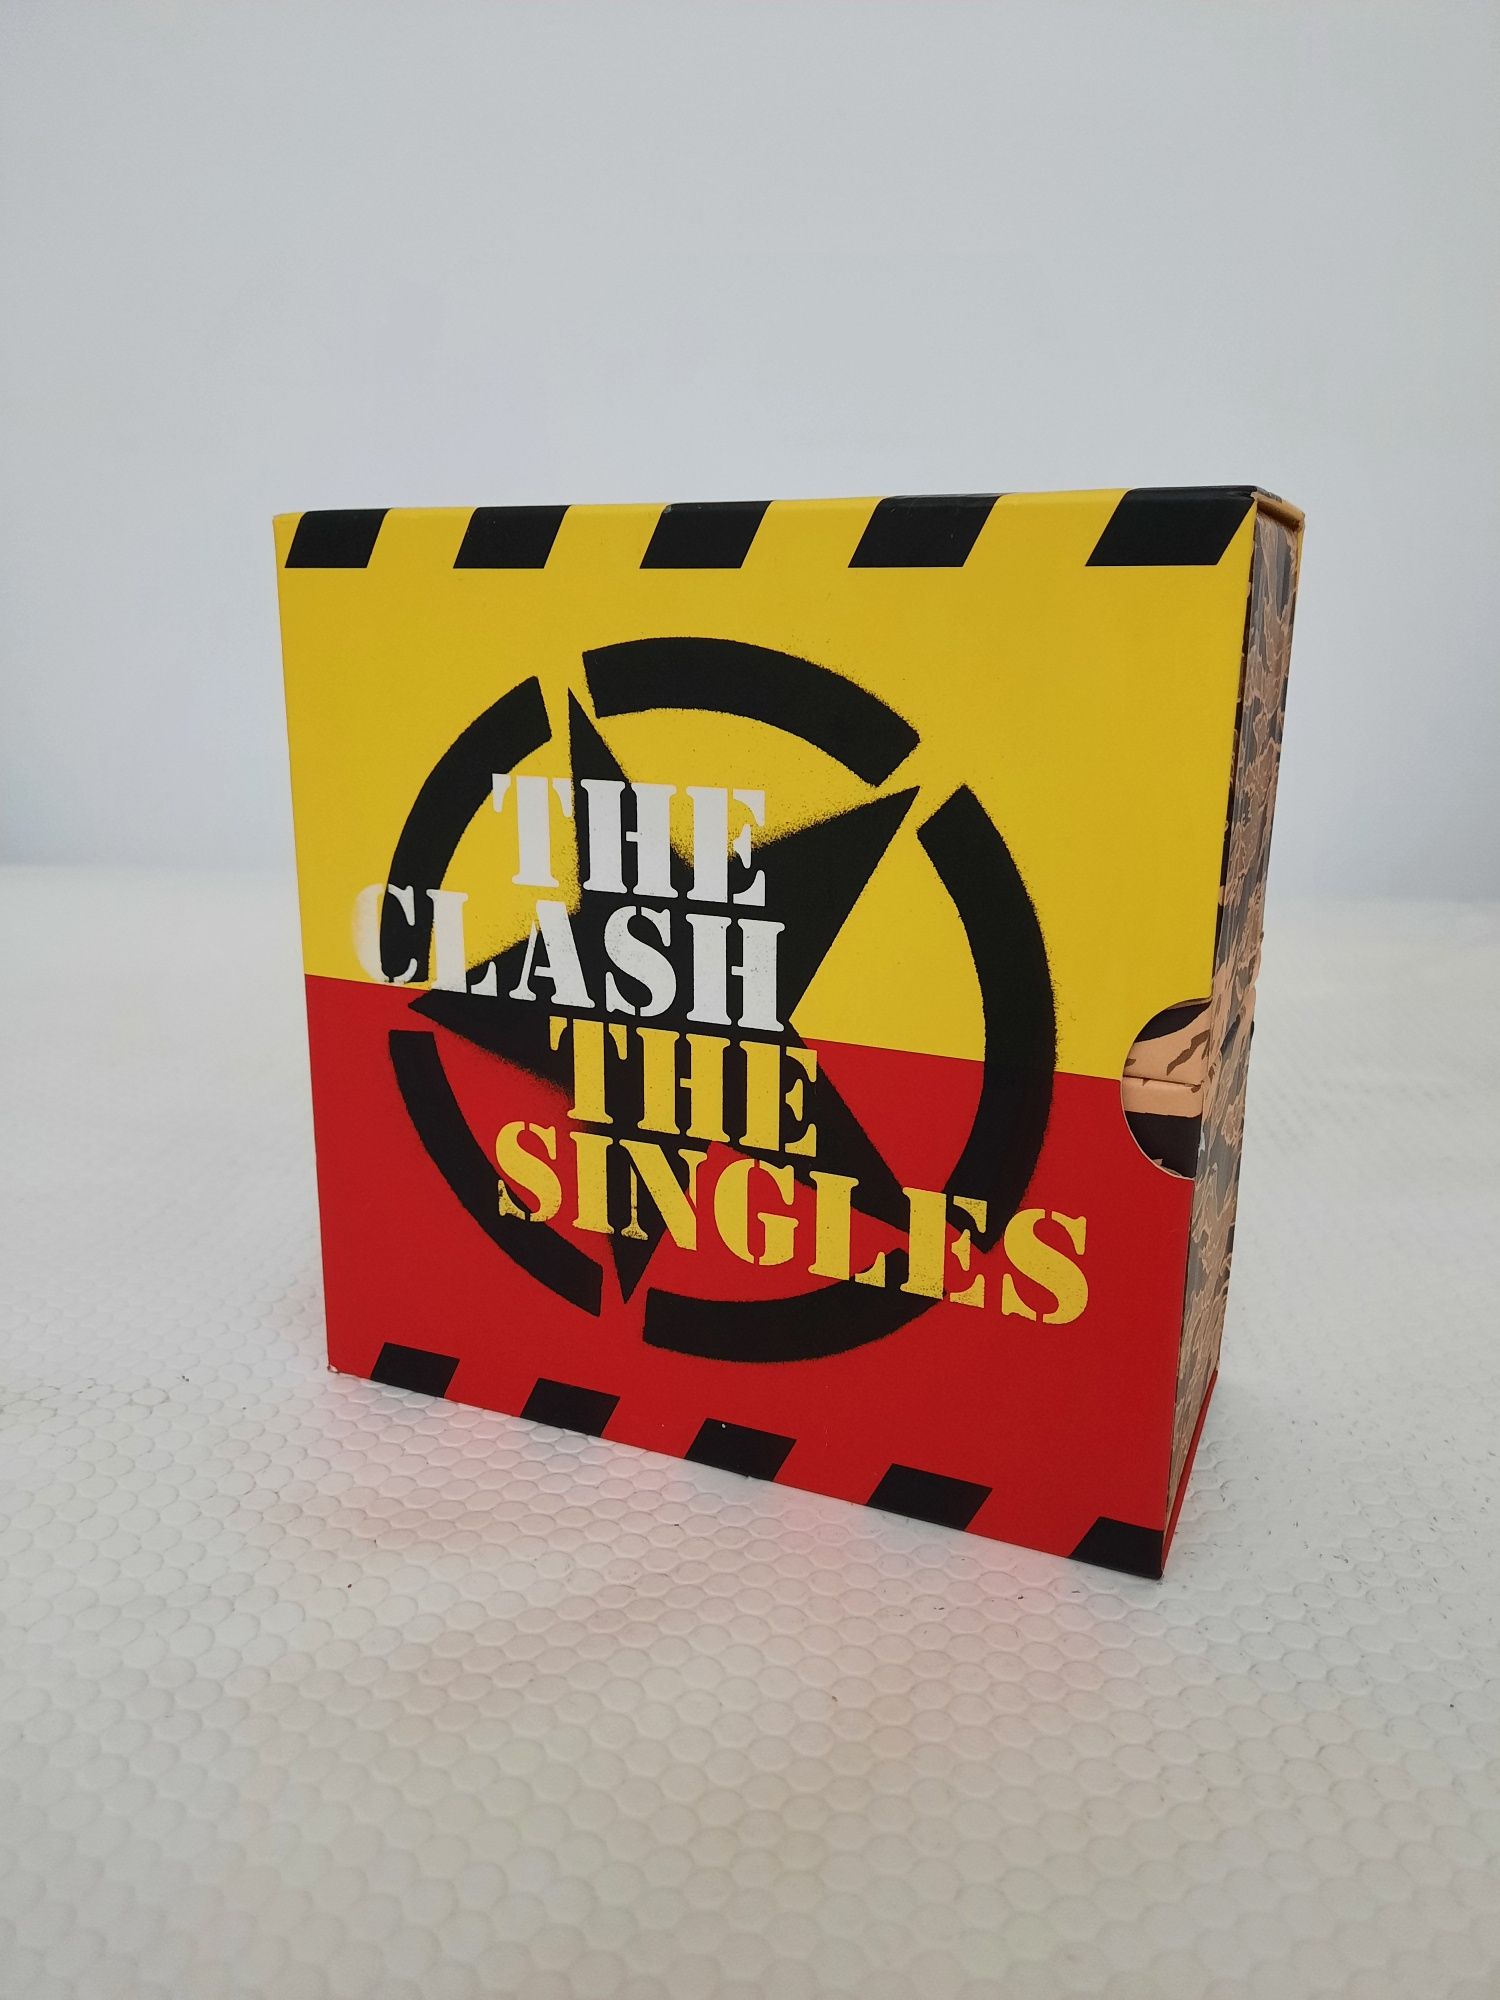 The Clash, The Singles (BOX SINGLES)